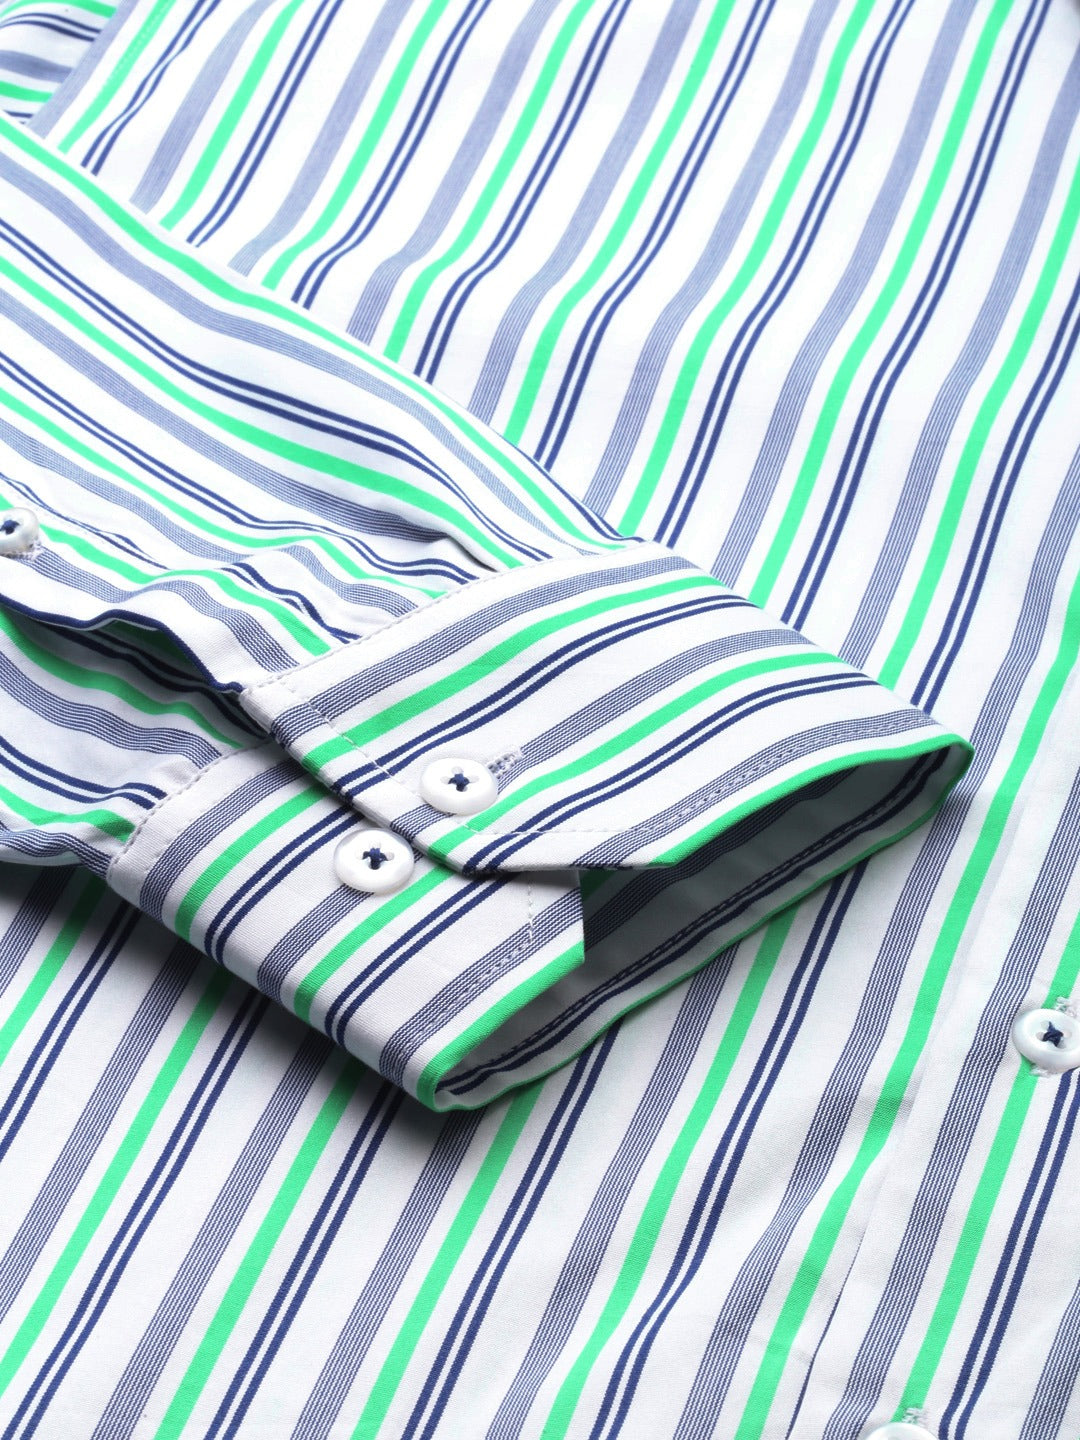 Men White & Blue Stripes Pure Cotton Slim Fit Formal Shirt